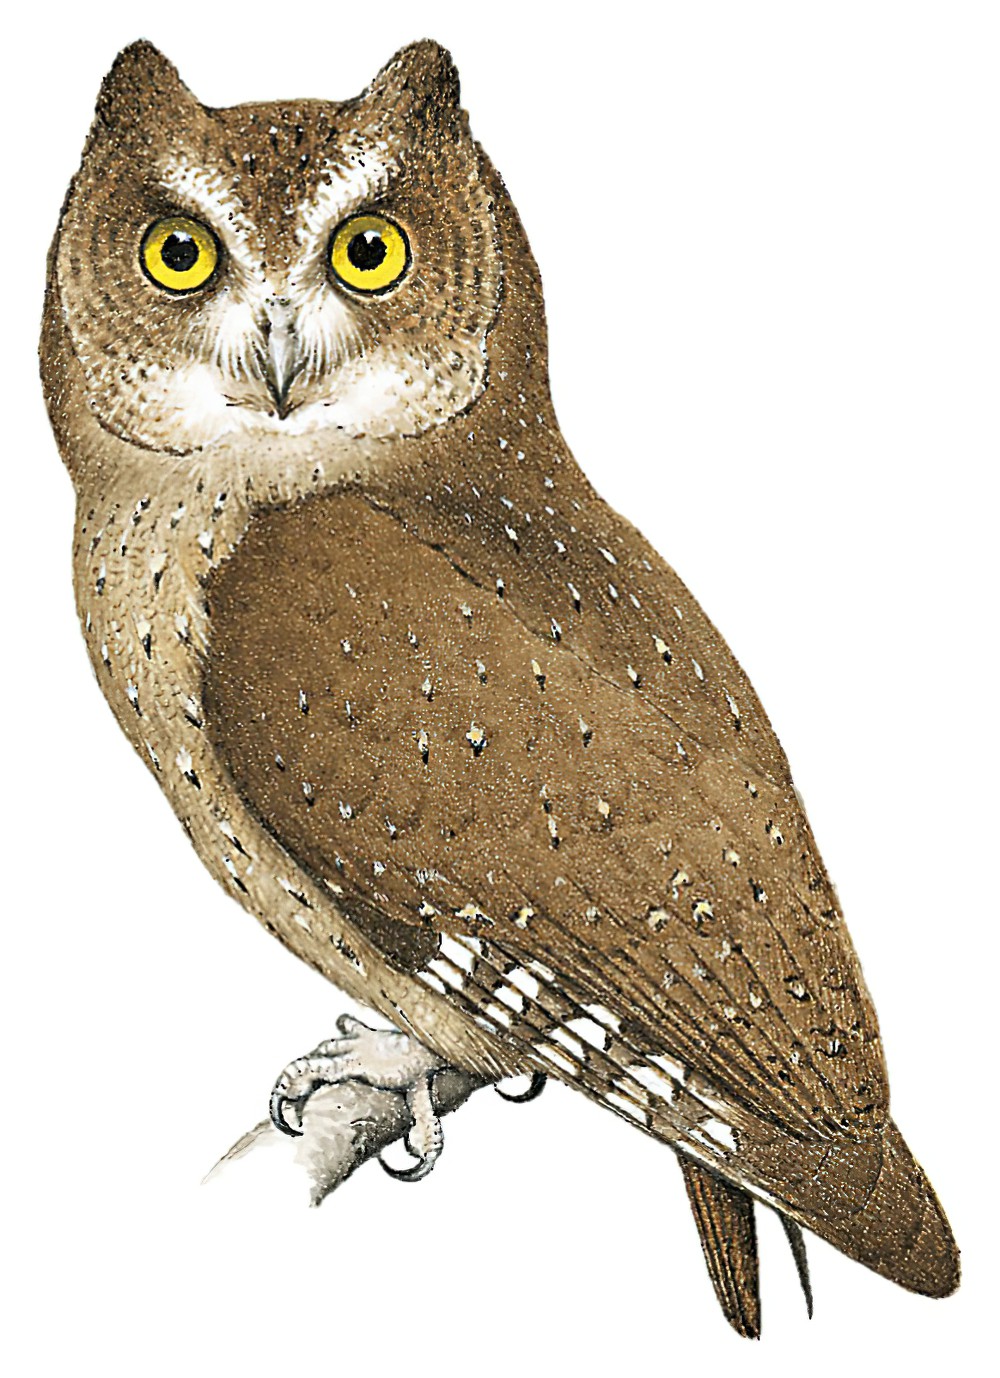 Andaman Scops-Owl / Otus balli